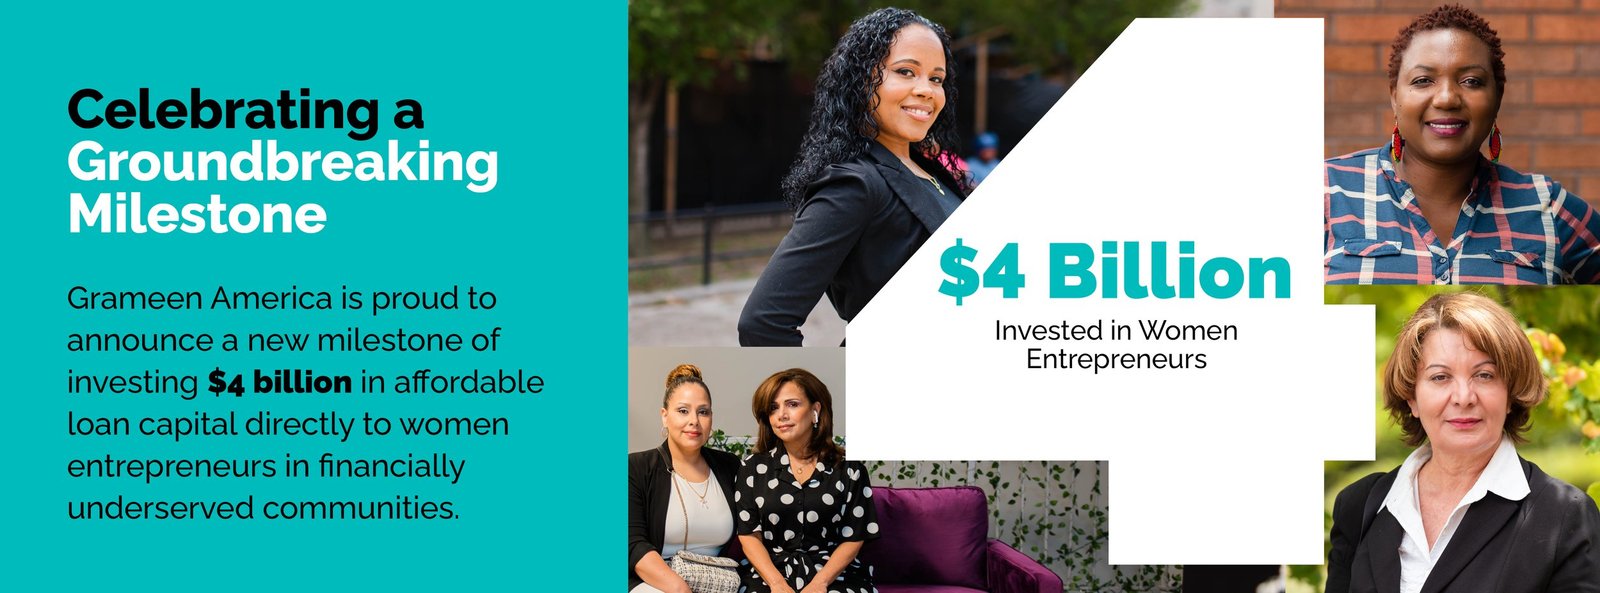 Grameen America Invests $4 Billion in Women Entrepreneurs